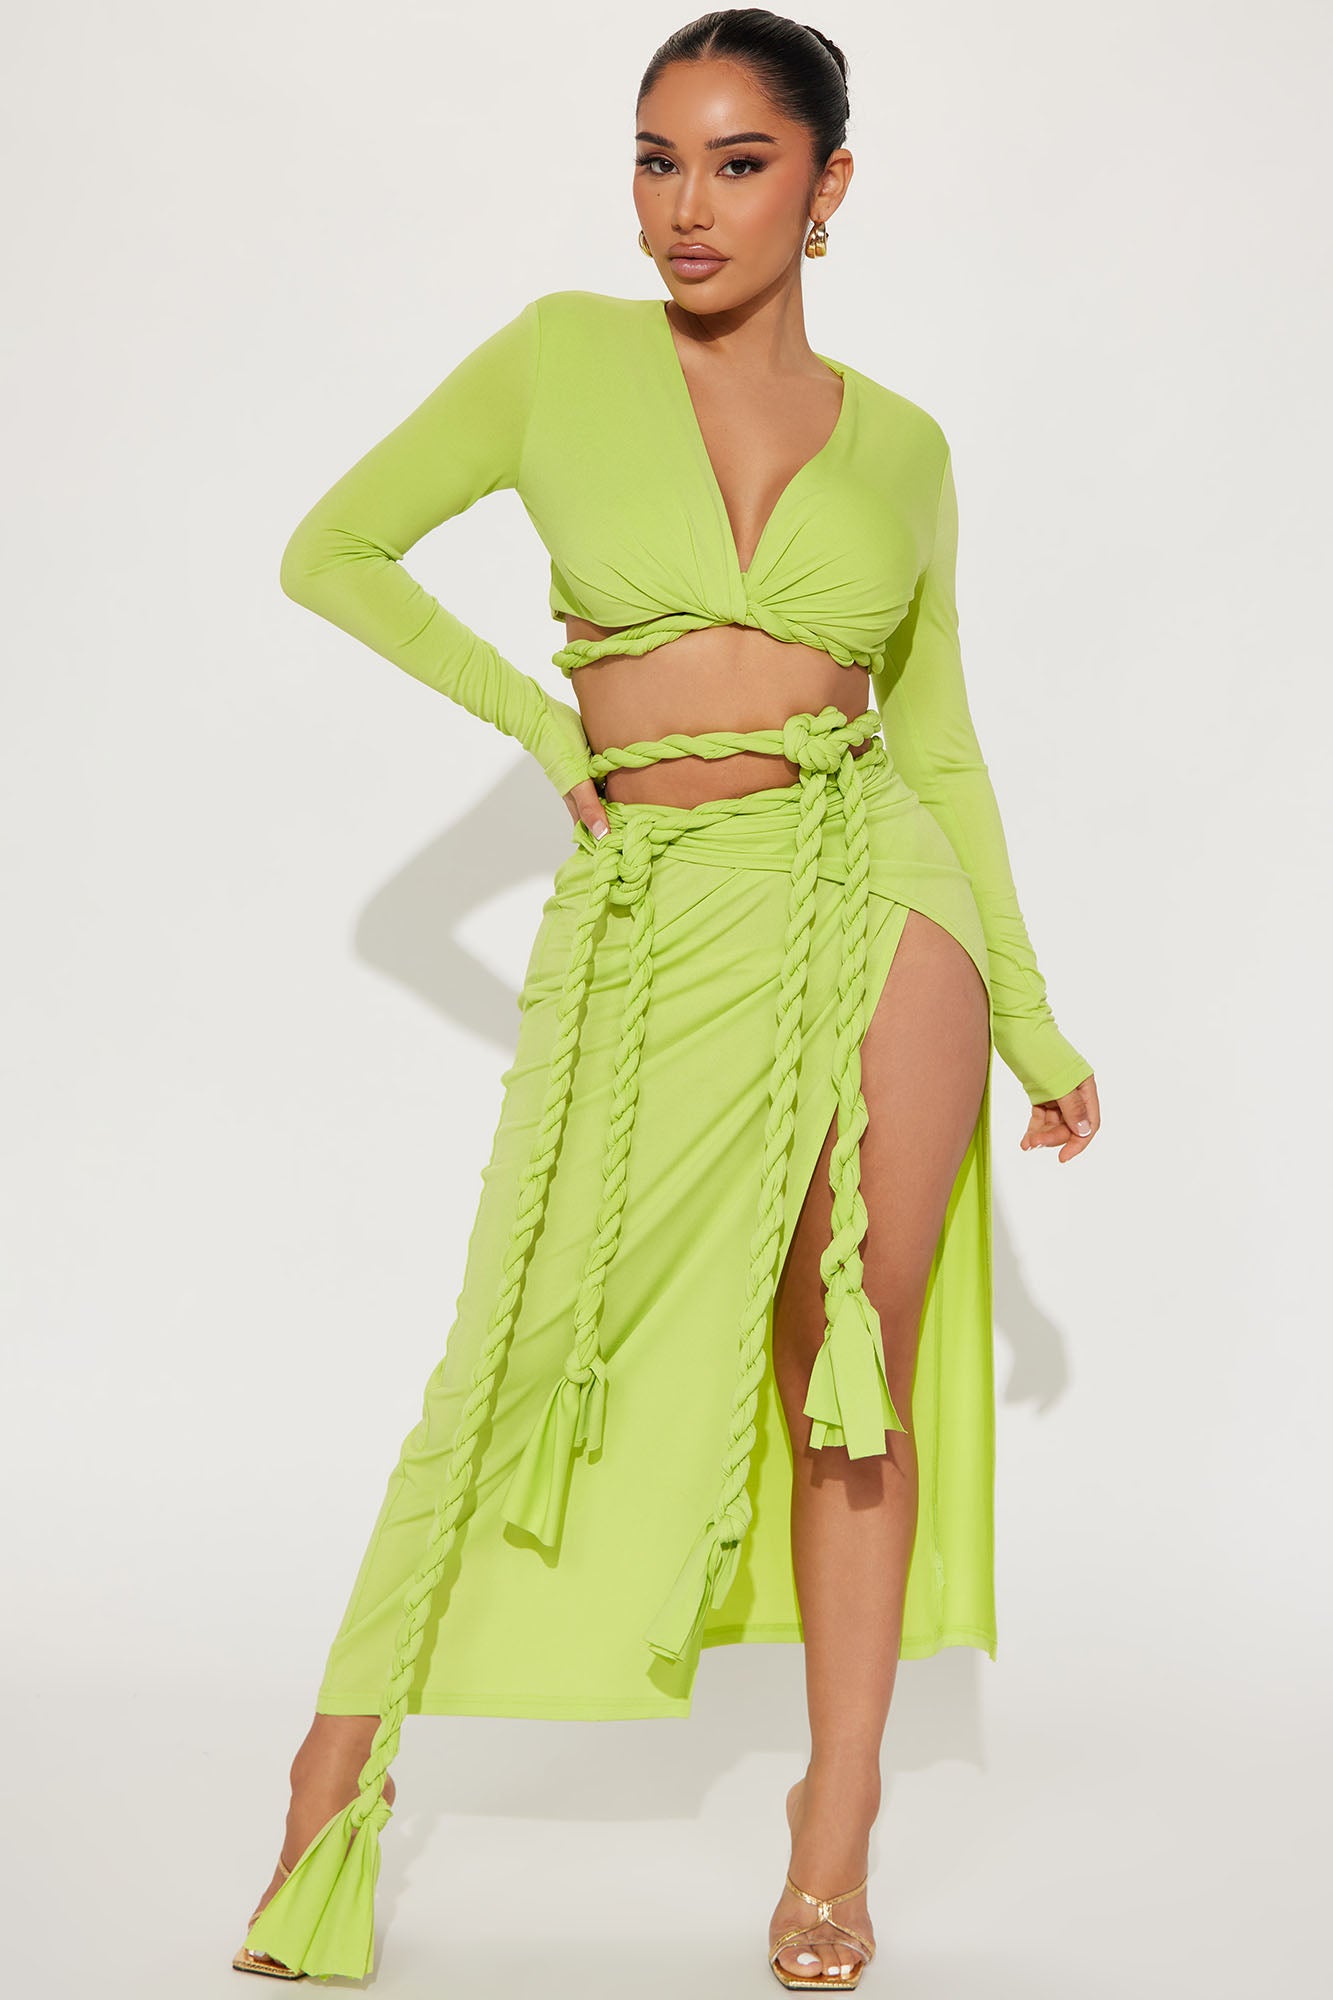 Reina Rope Skirt Set - Lime, Fashion Nova, Matching Sets